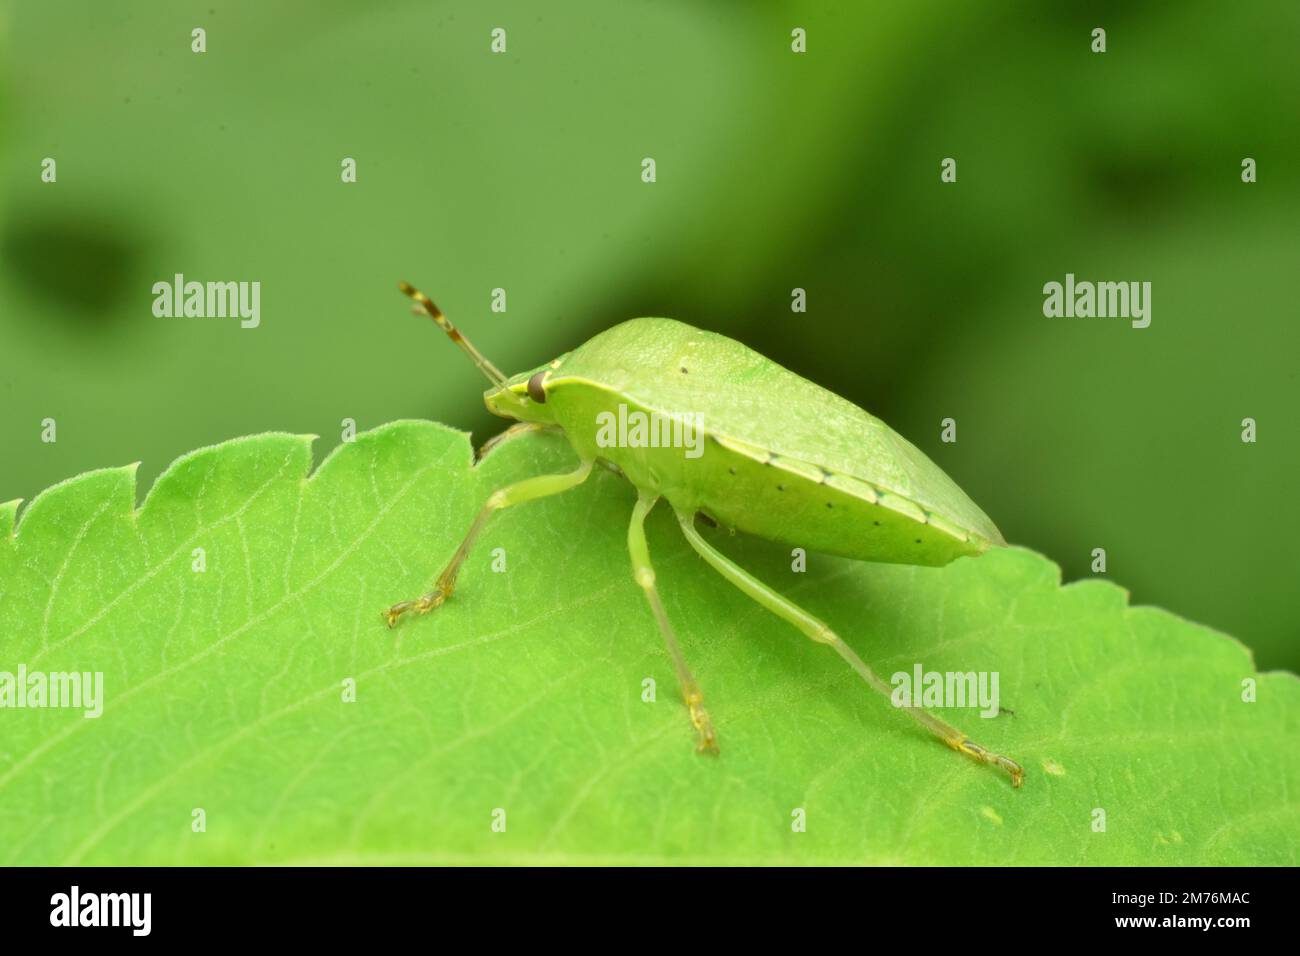 Southern green stink bug crawling on green leaf. Java Indonesia. Nezara viridula. Stock Photo